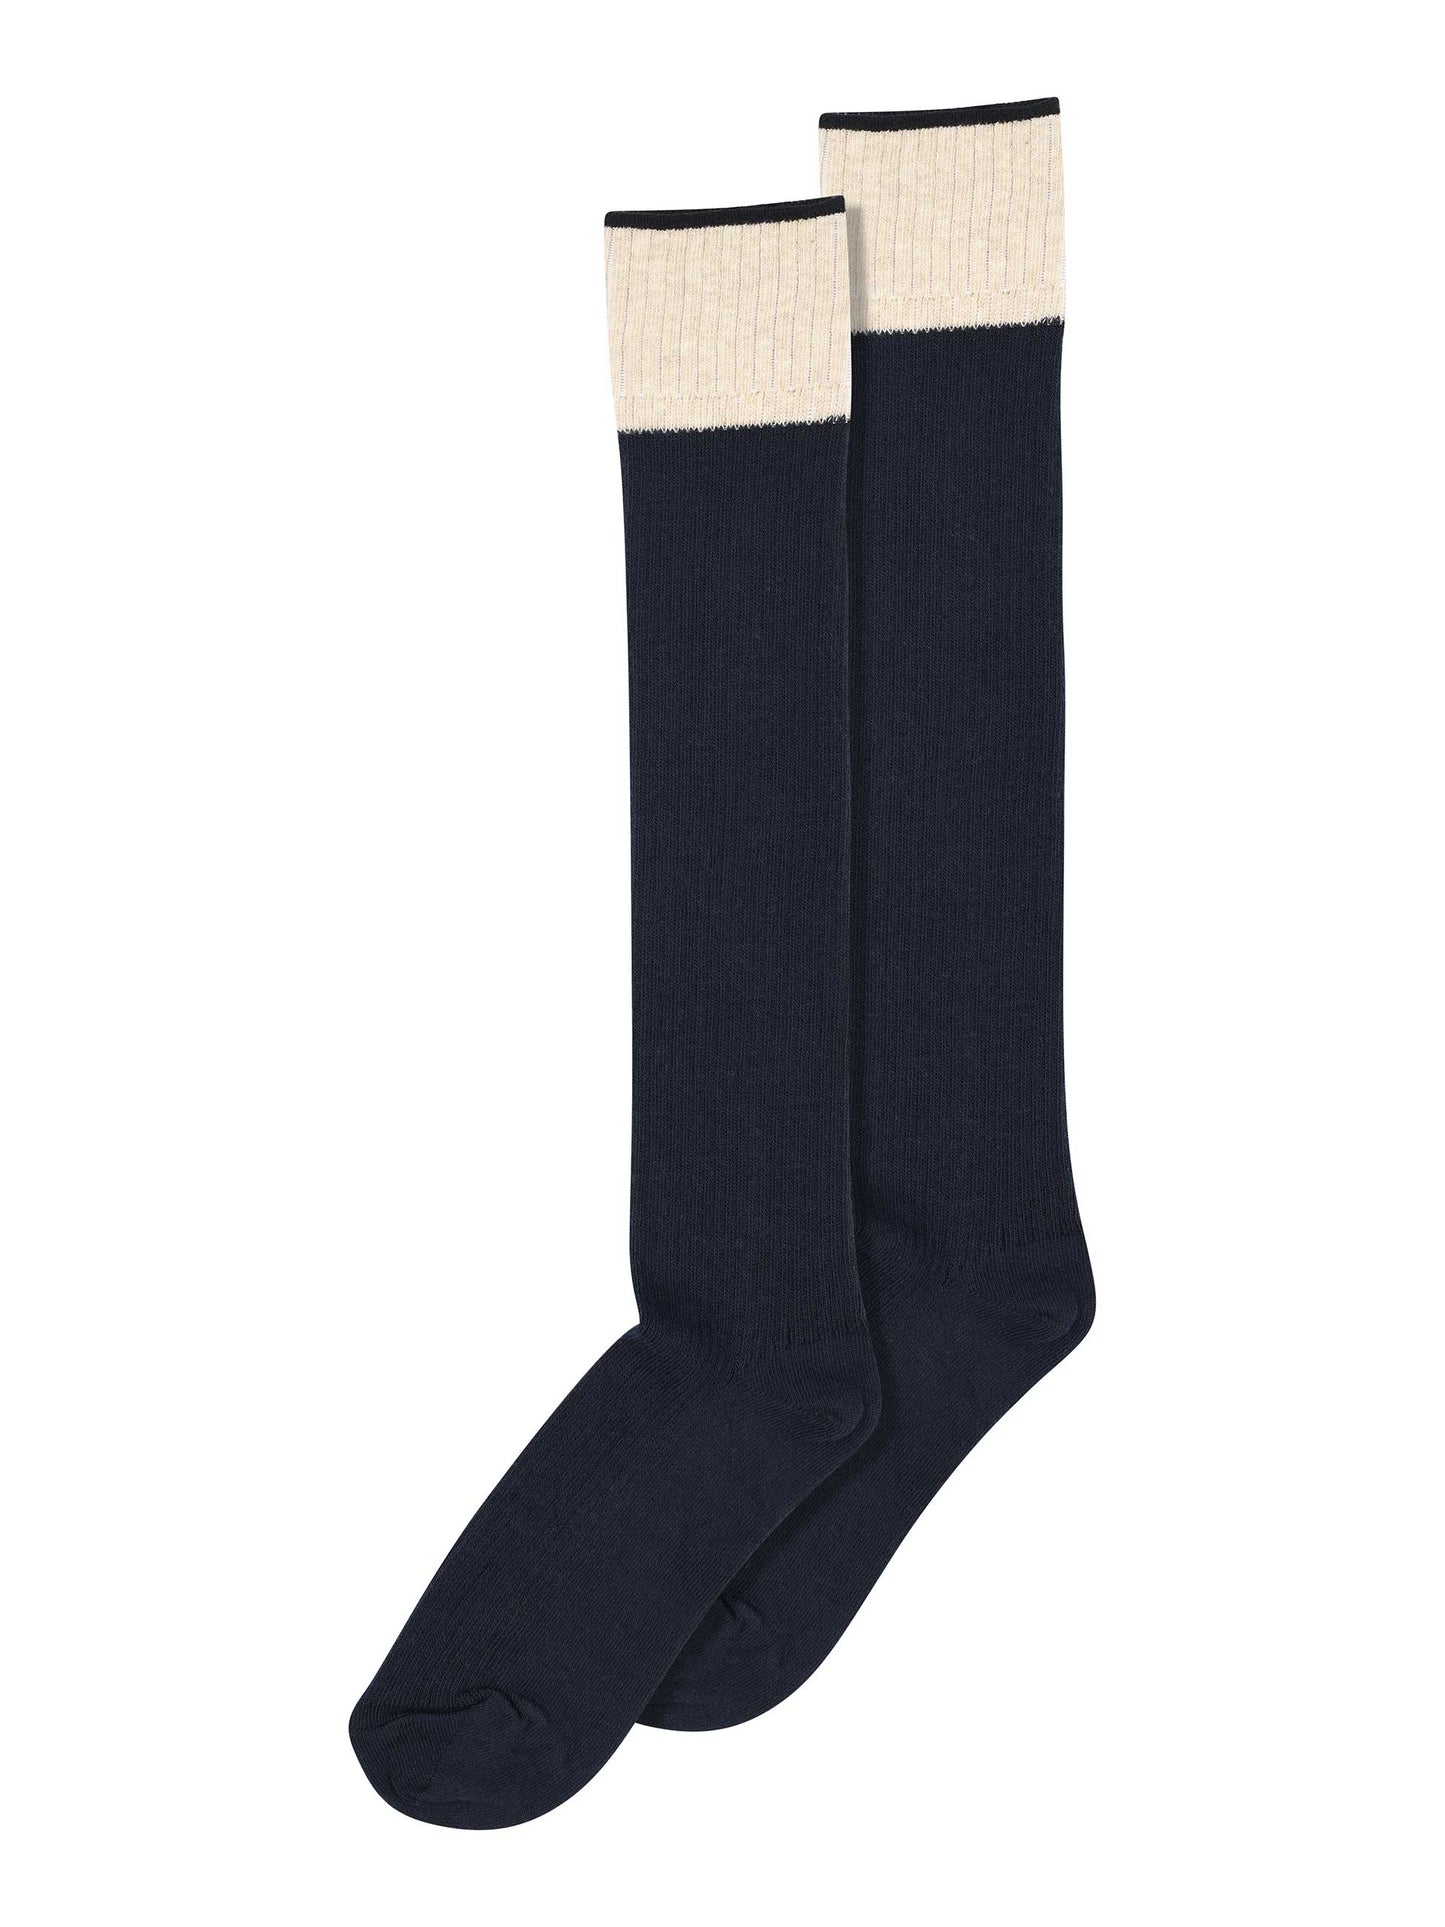 Navy Rib Contrast Top Knee High Socks